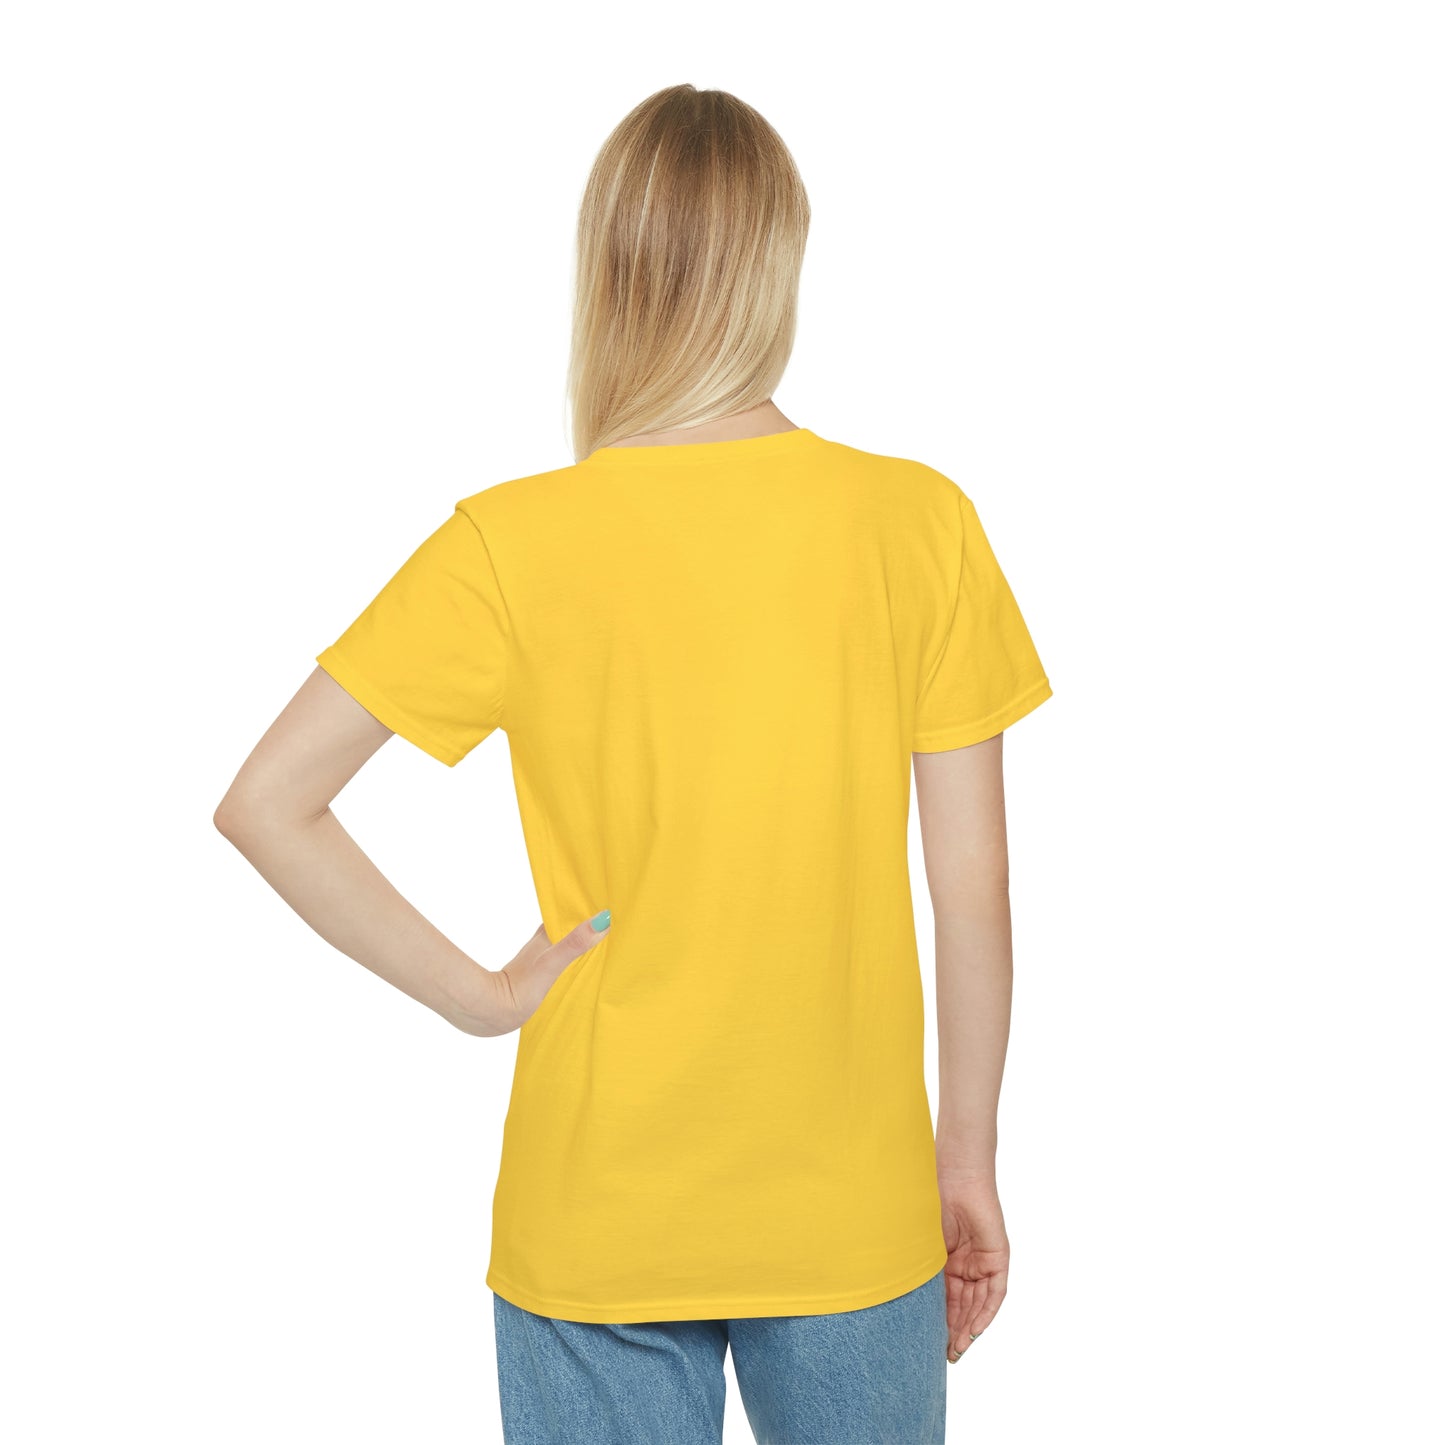 Abuelita Unisex Iconic T-Shirt